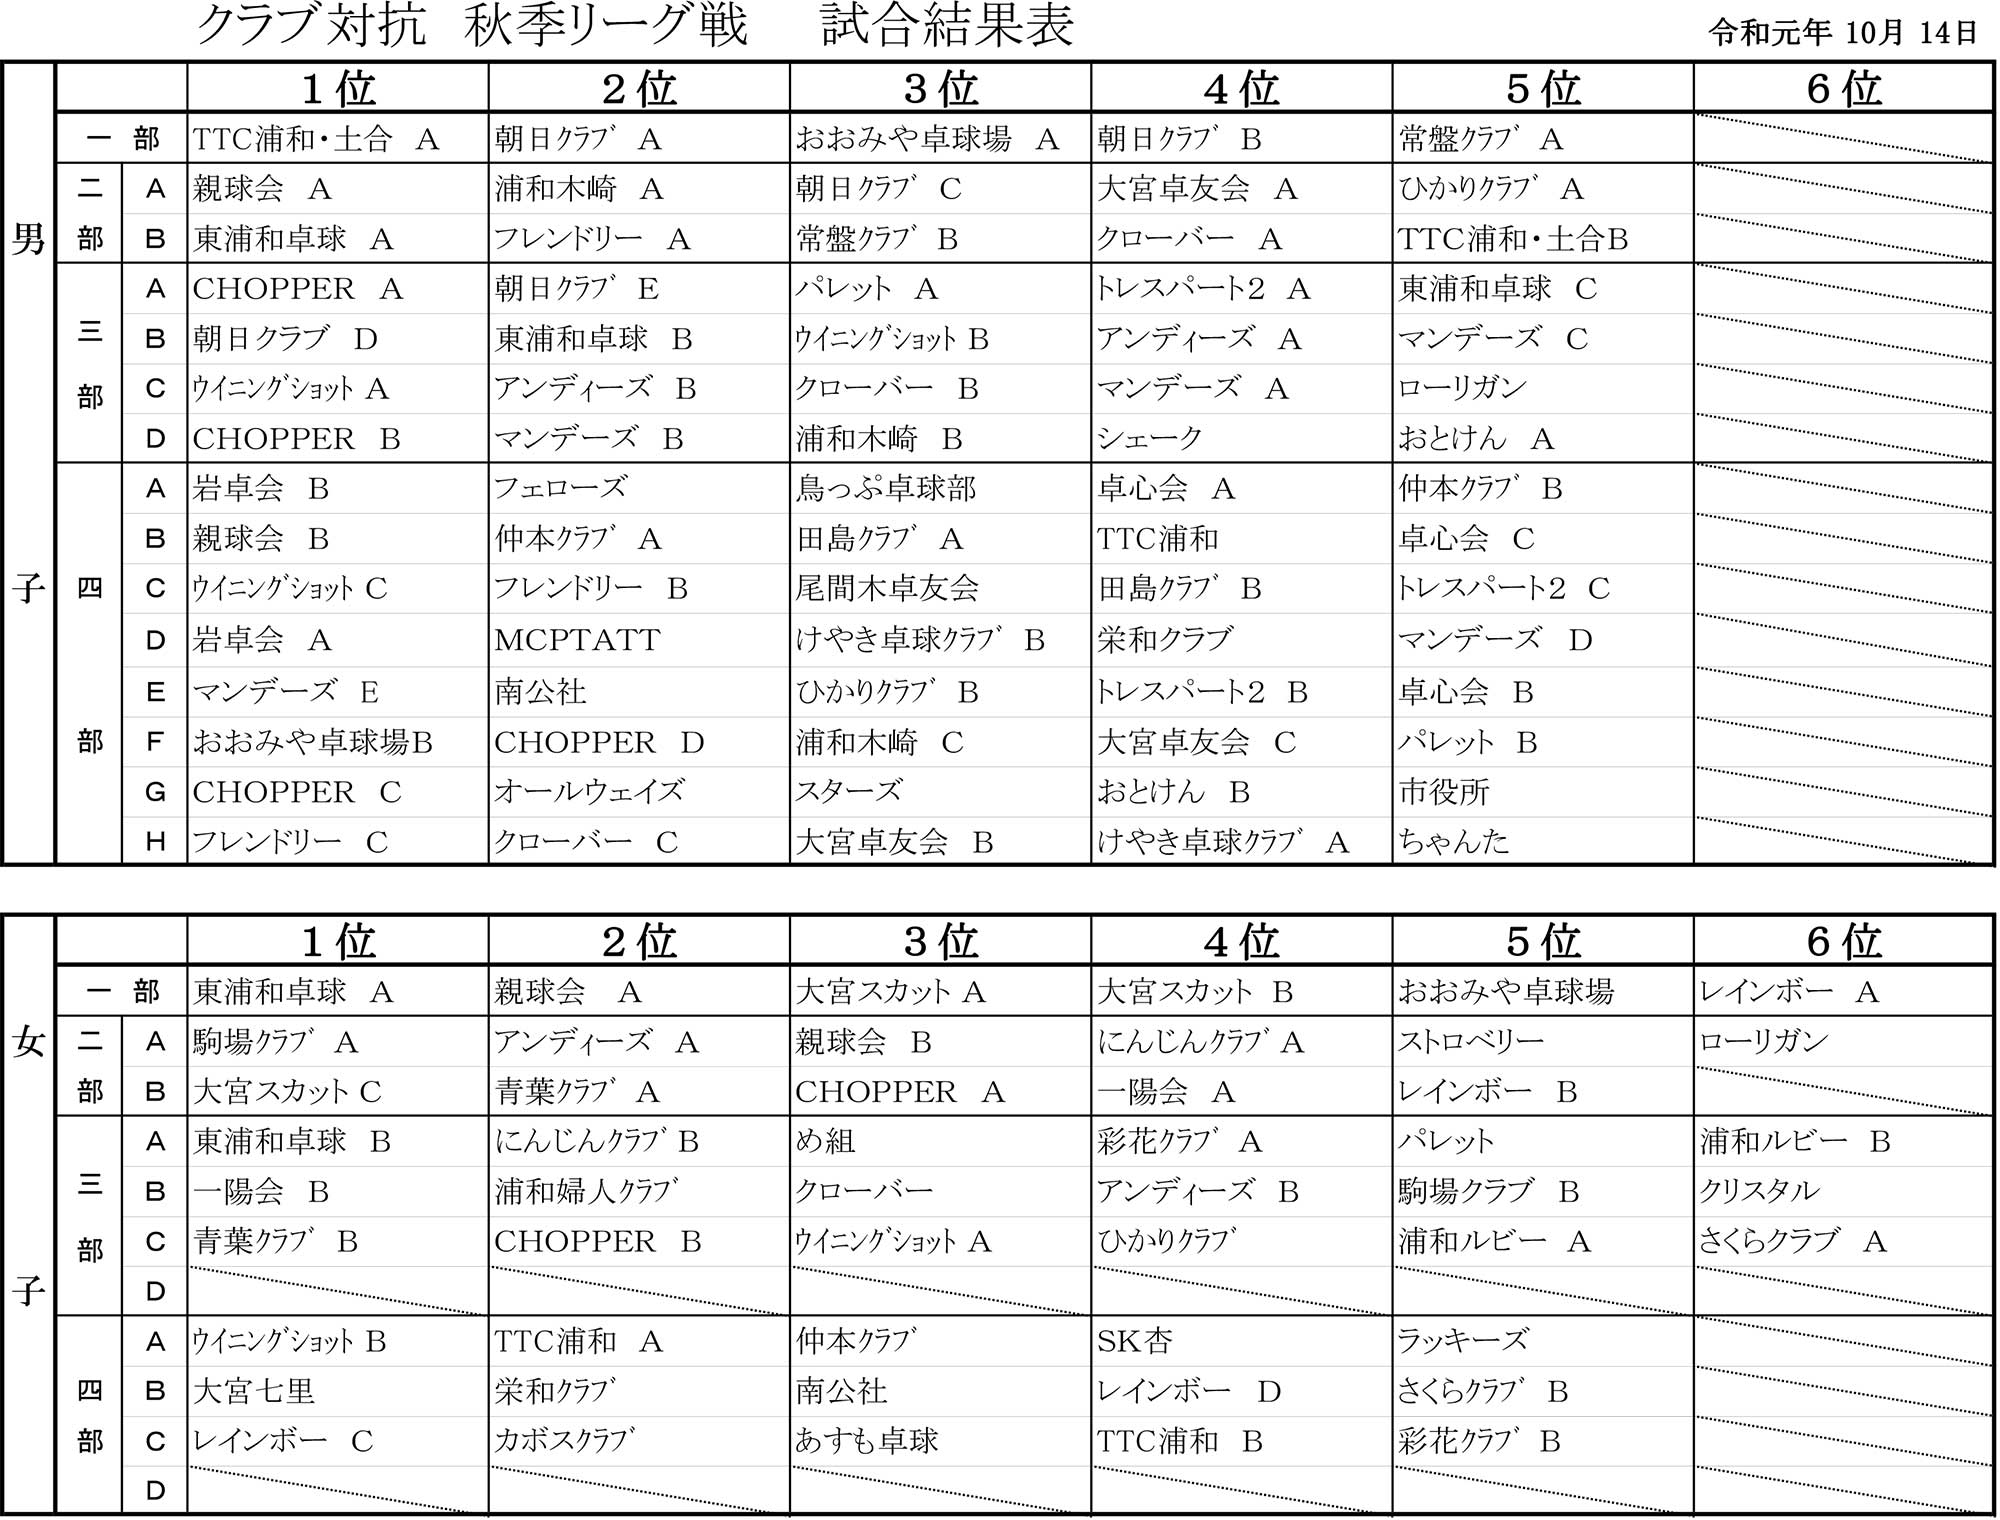 R元秋季リーグ-結果表10